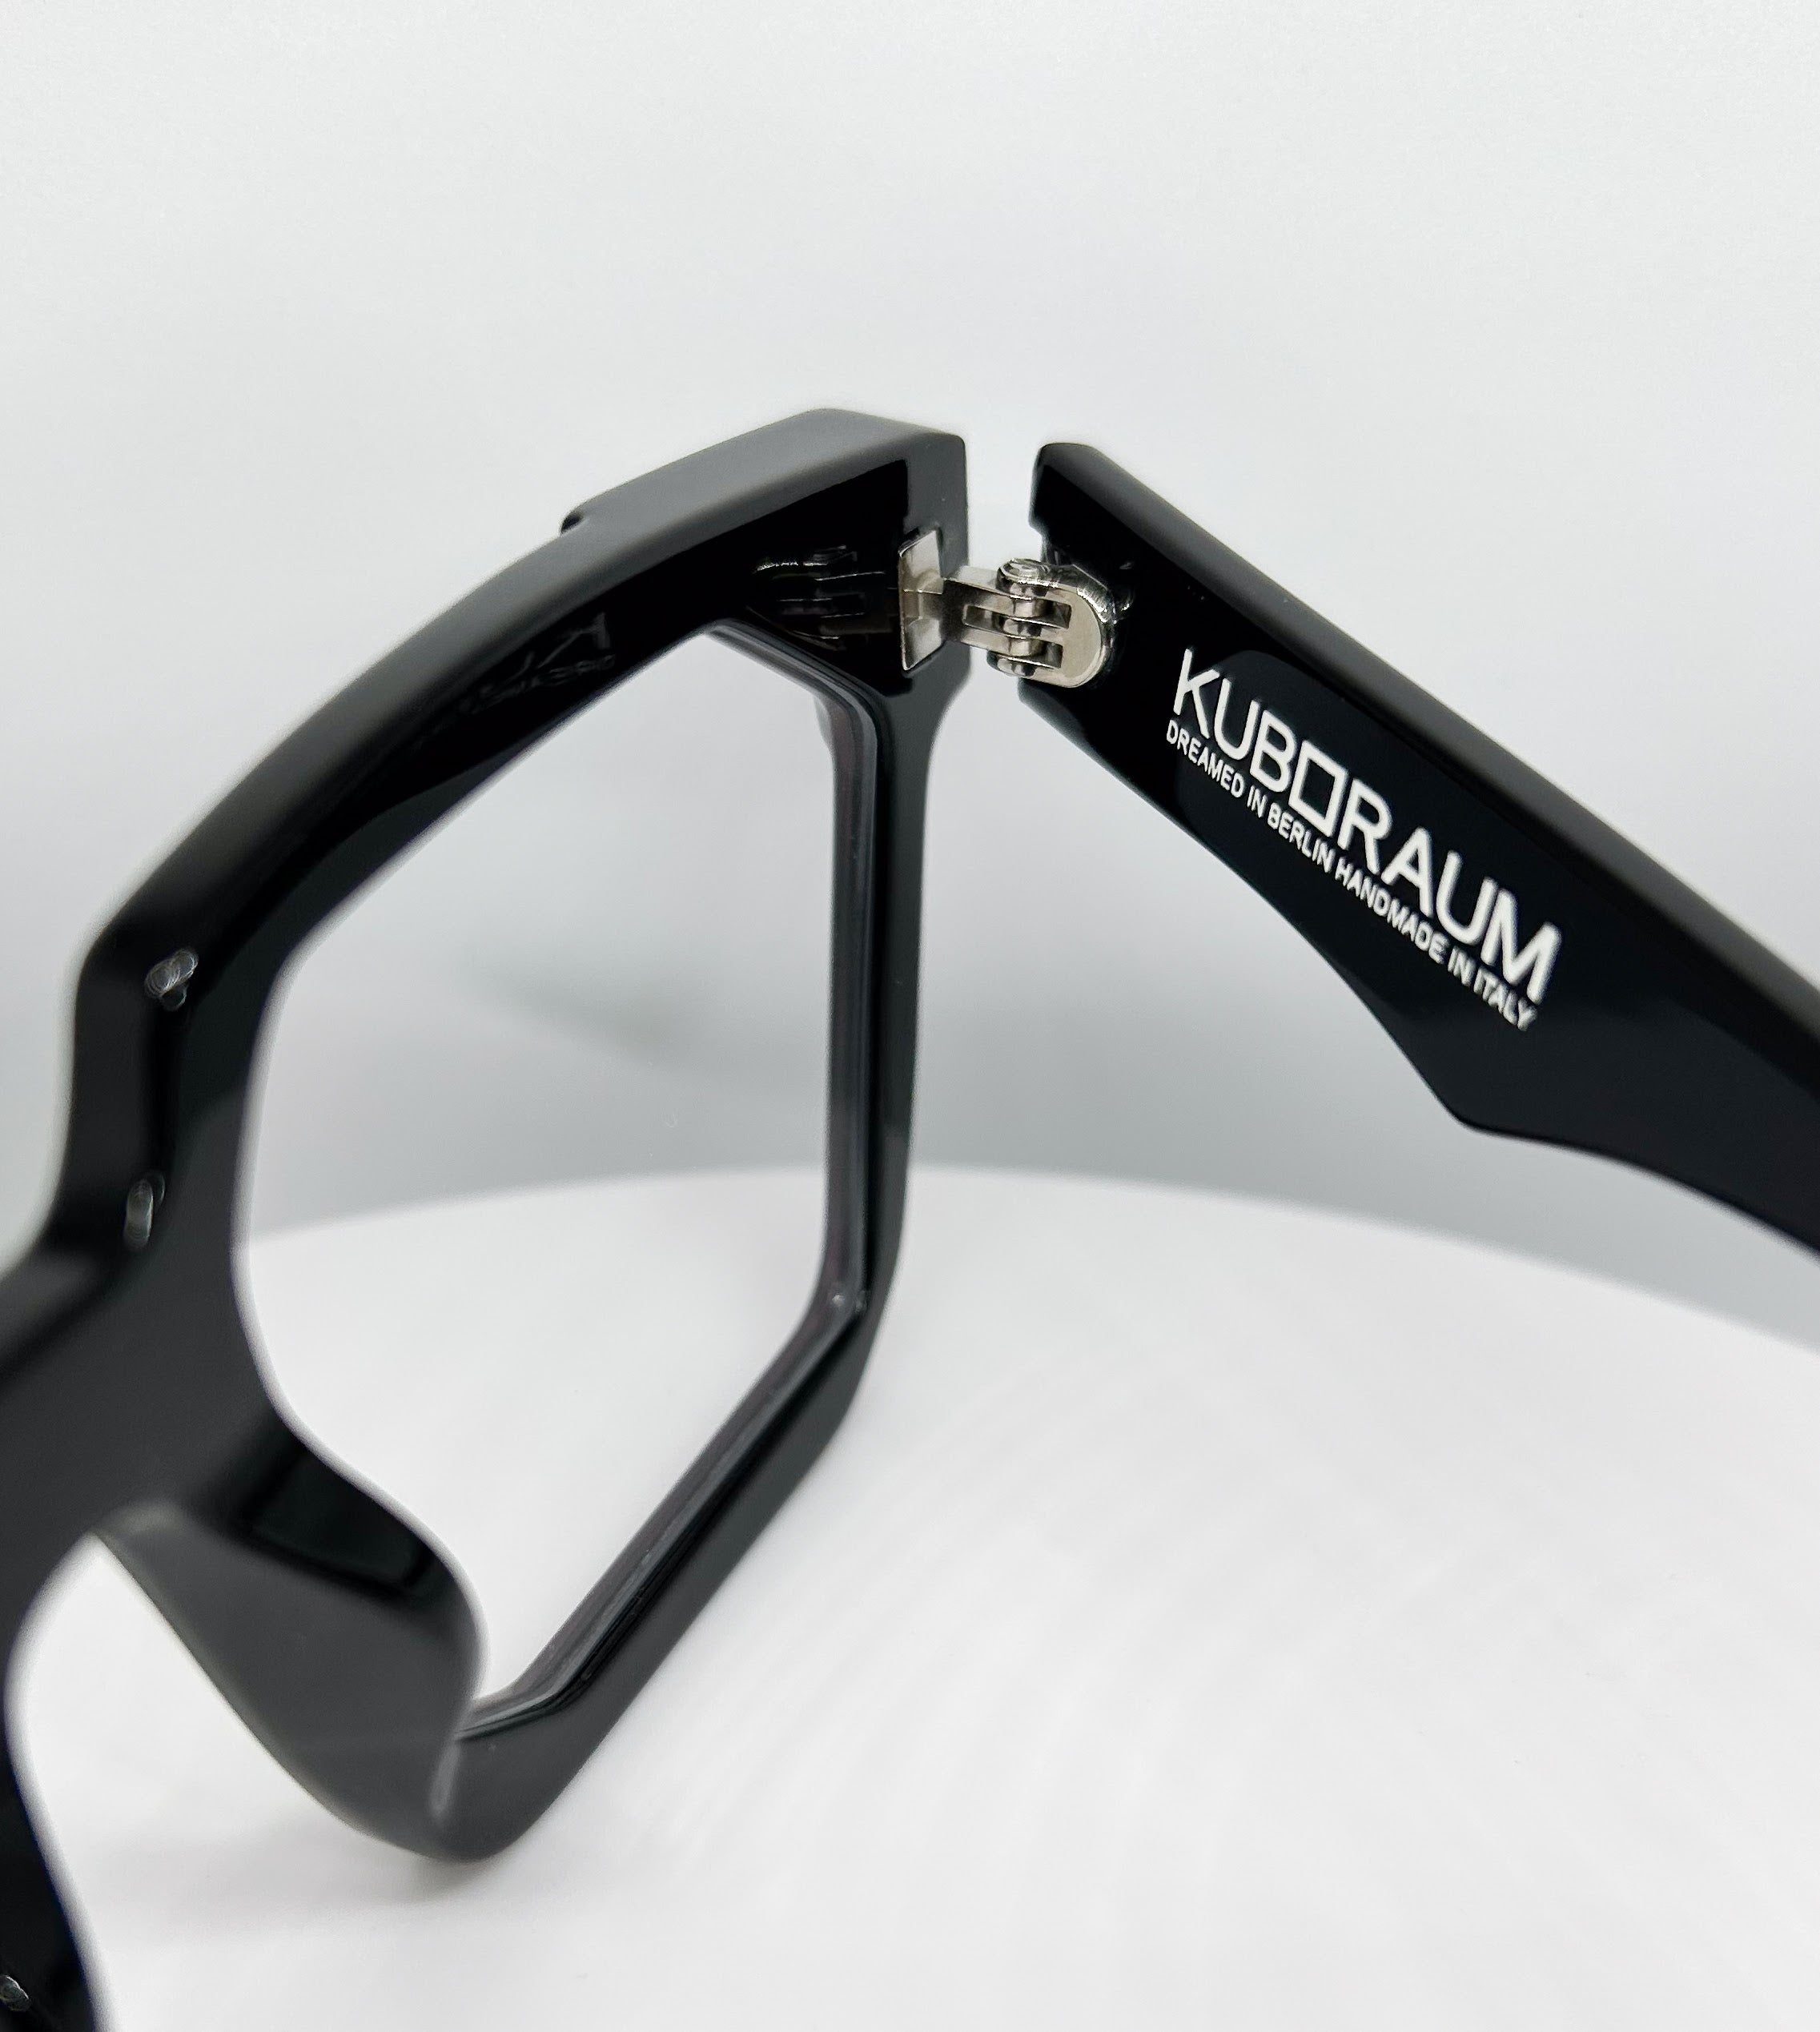 Kuboraum Black K30 Glasses